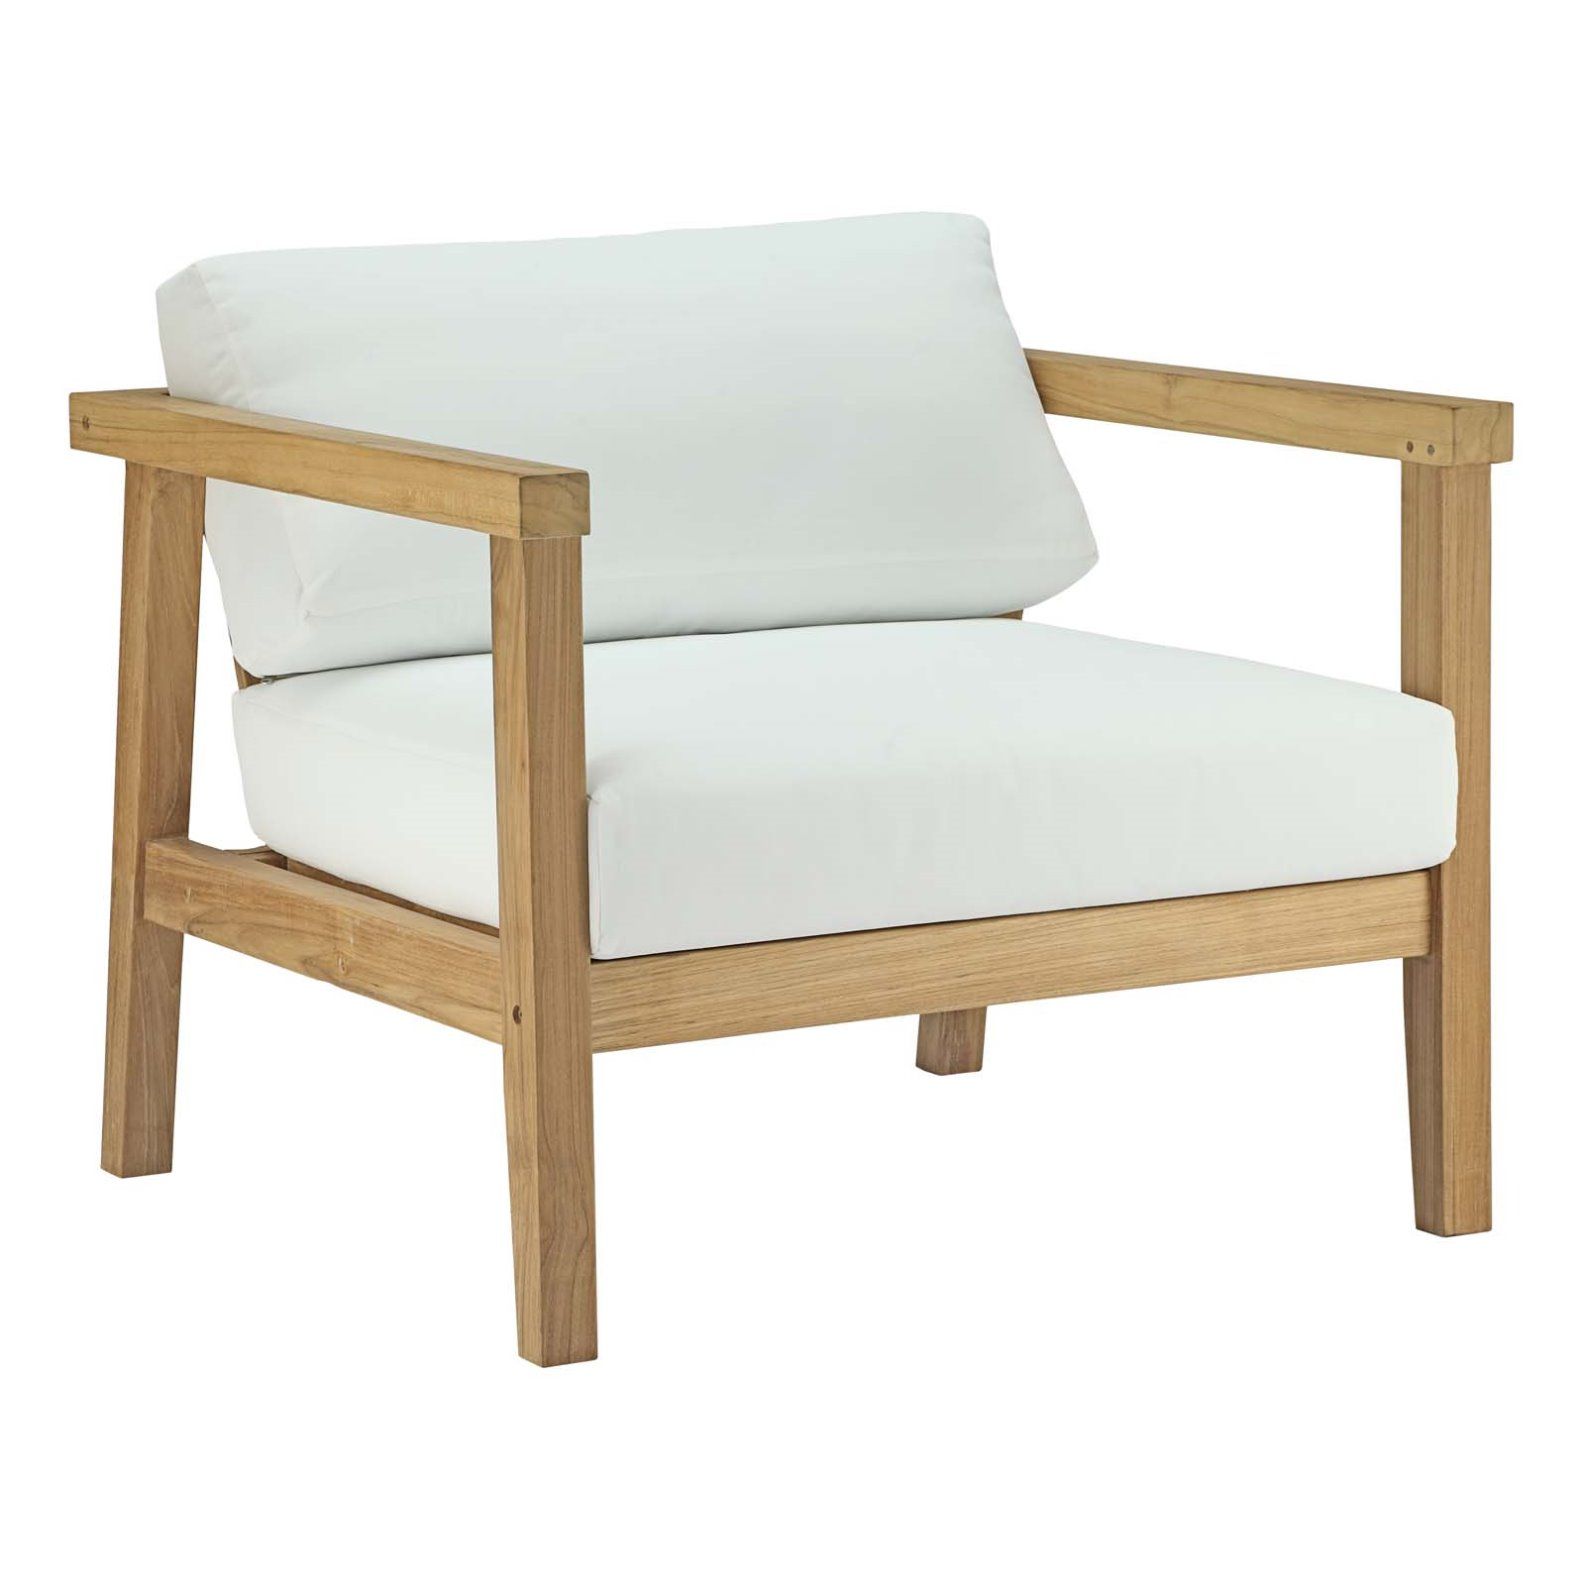 Modern Contemporary Urban Design Outdoor Patio Balcony Lounge Chair, White, Wood | Walmart (US)